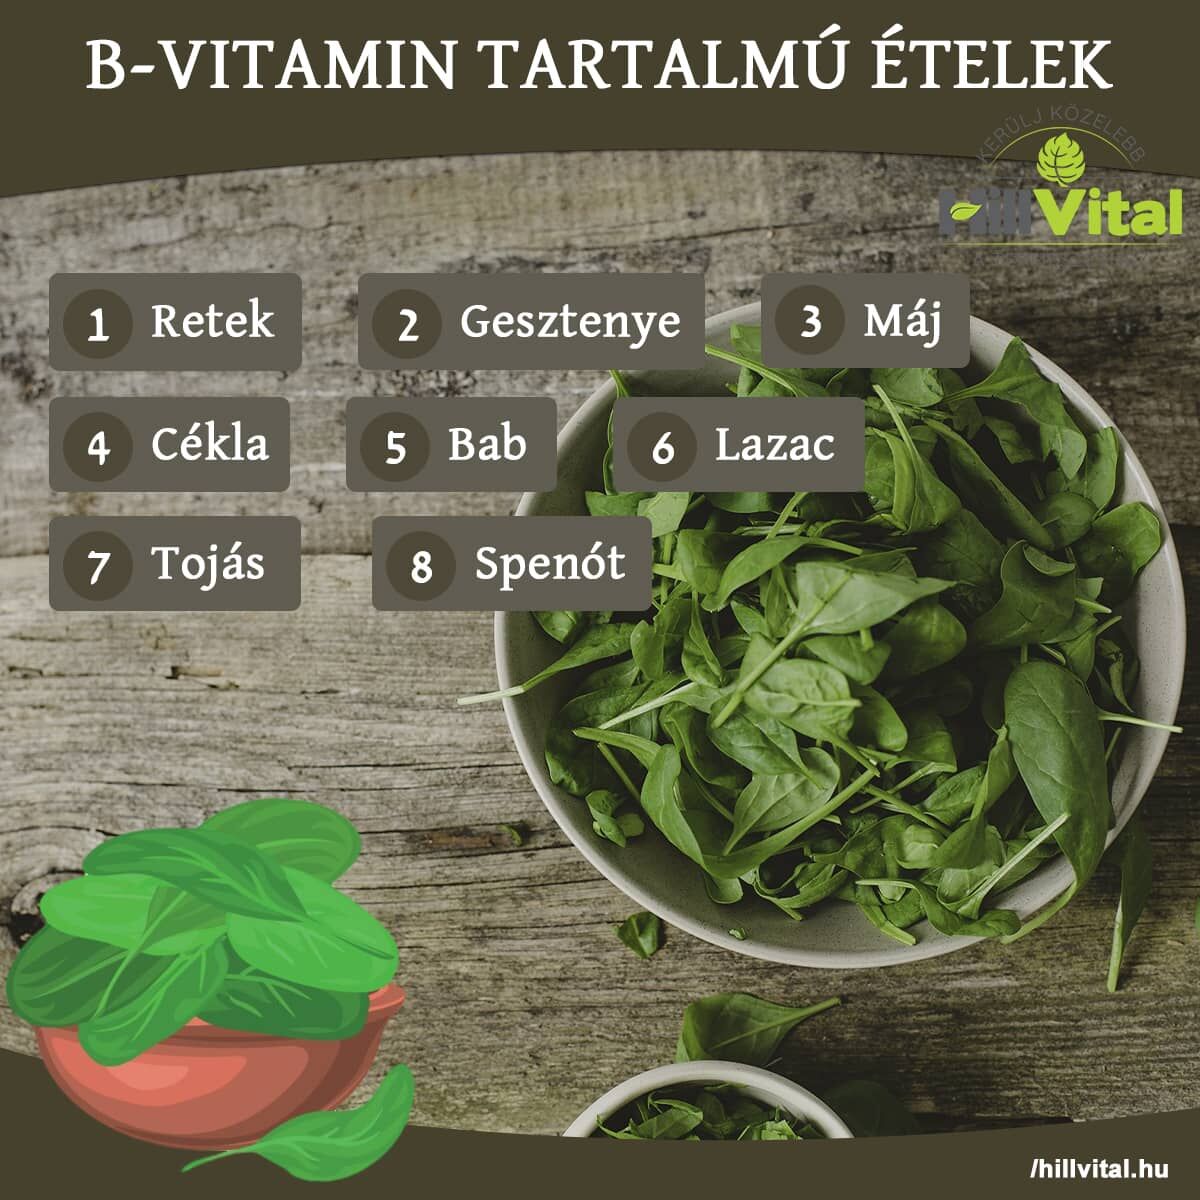 B-vitamin tartalmú ételek